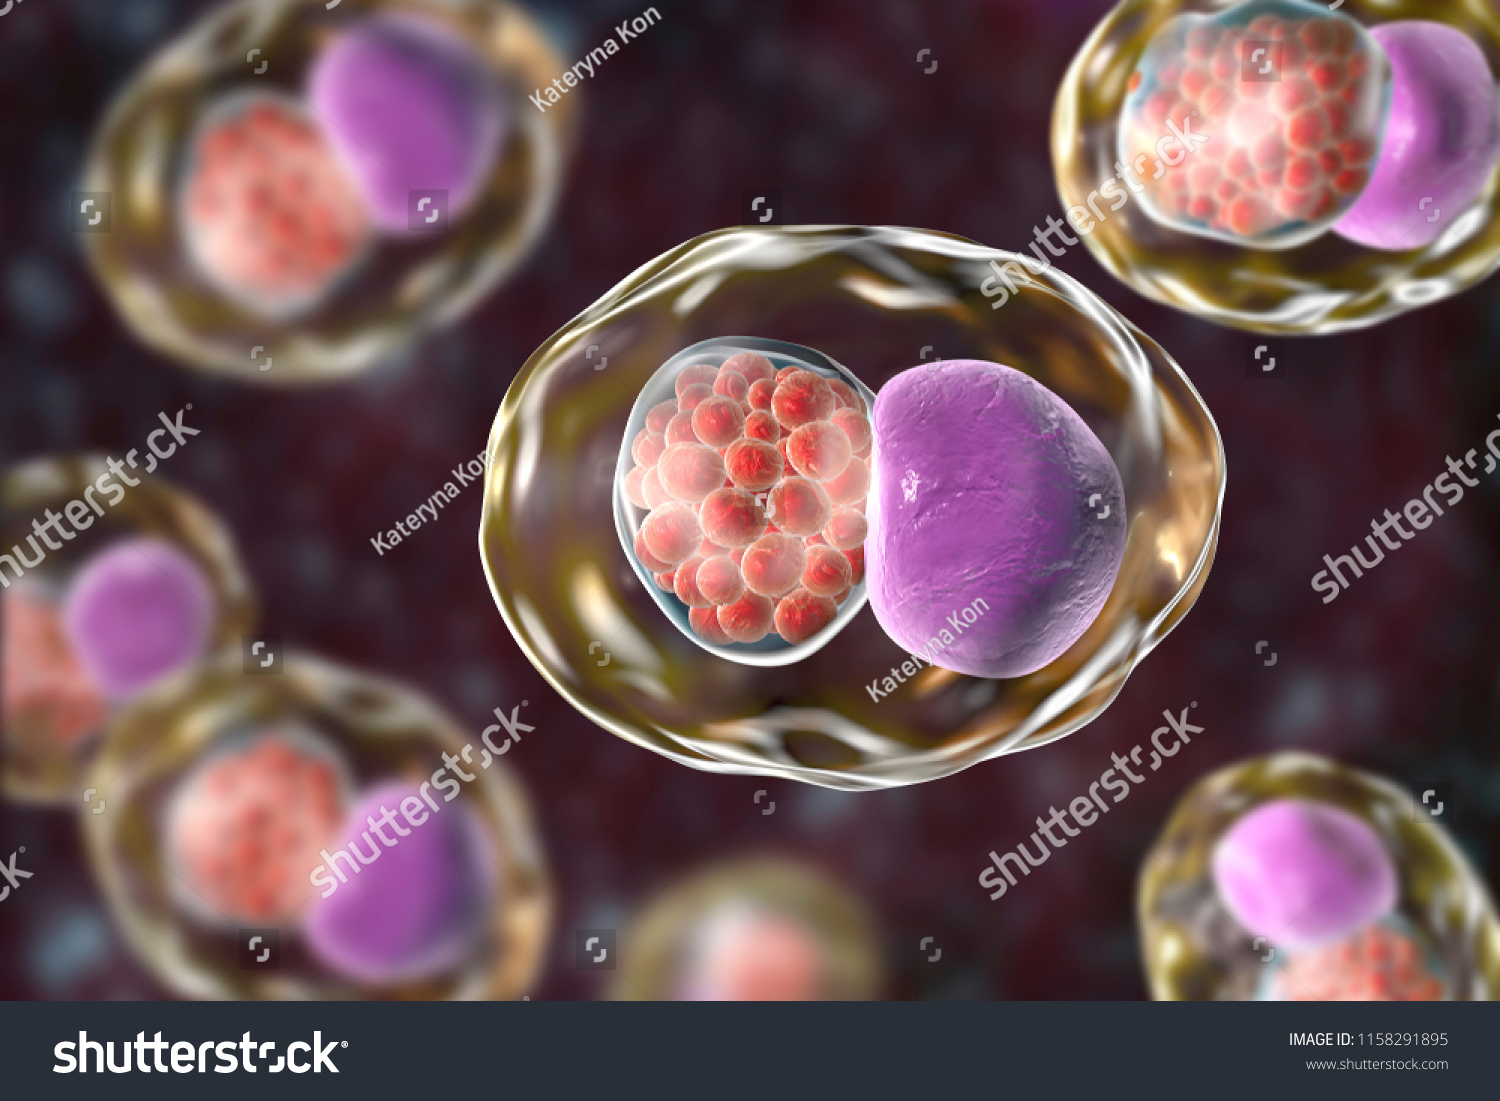 Chlamydia Trachomatis Bacteria 3d Illustration Showing Stock Illustration 1158291895 2201